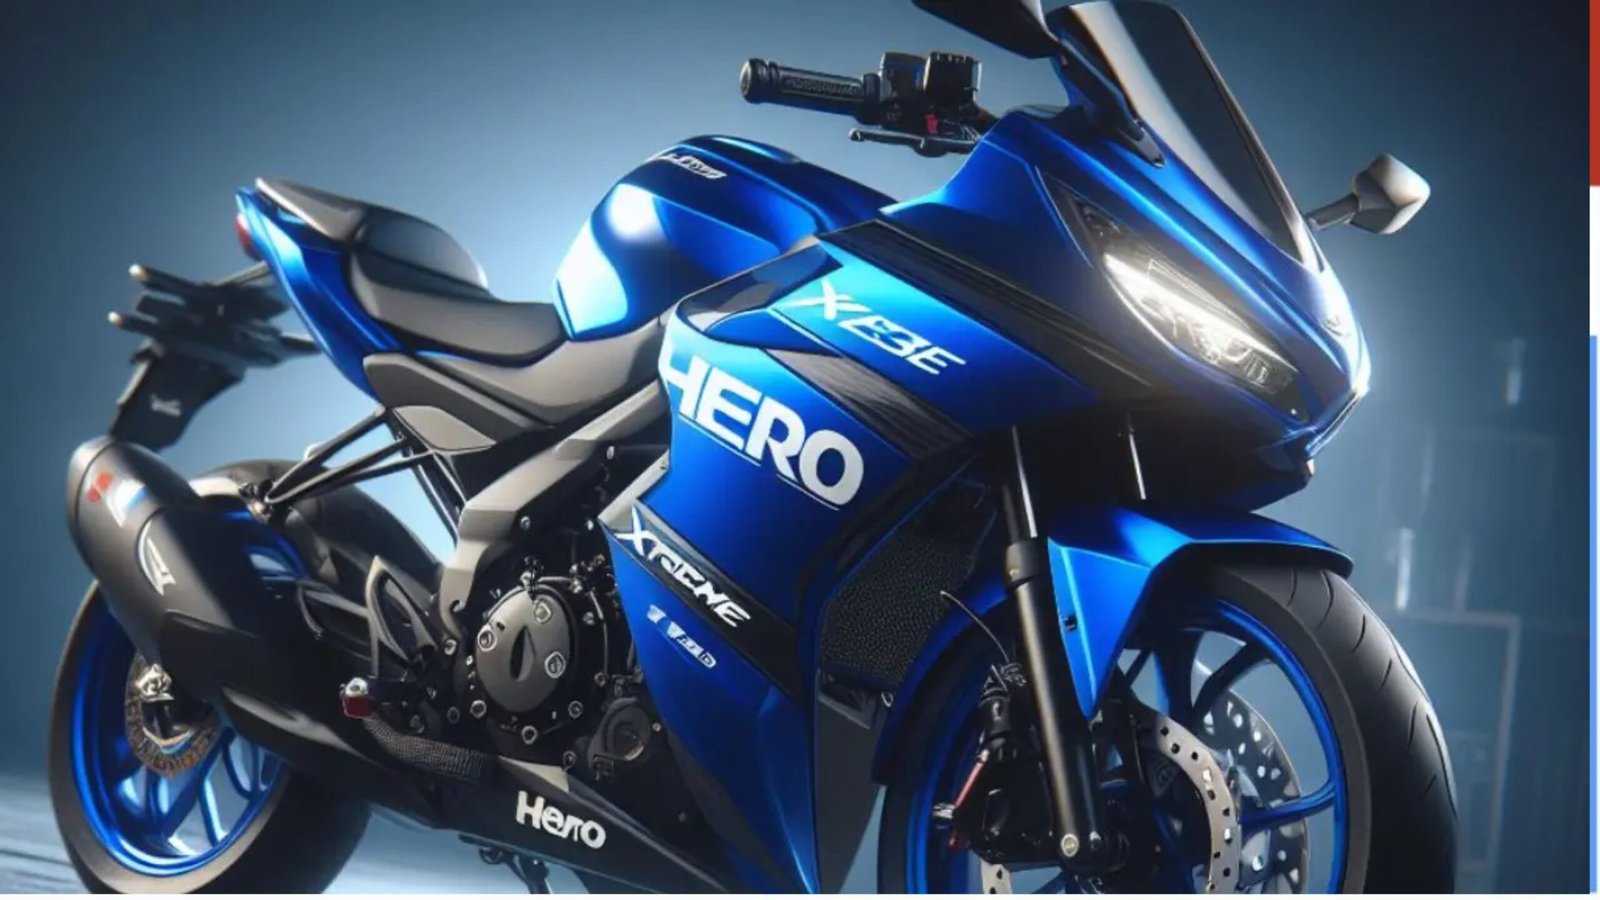 New Hero Extreme 125R bike On Road Price